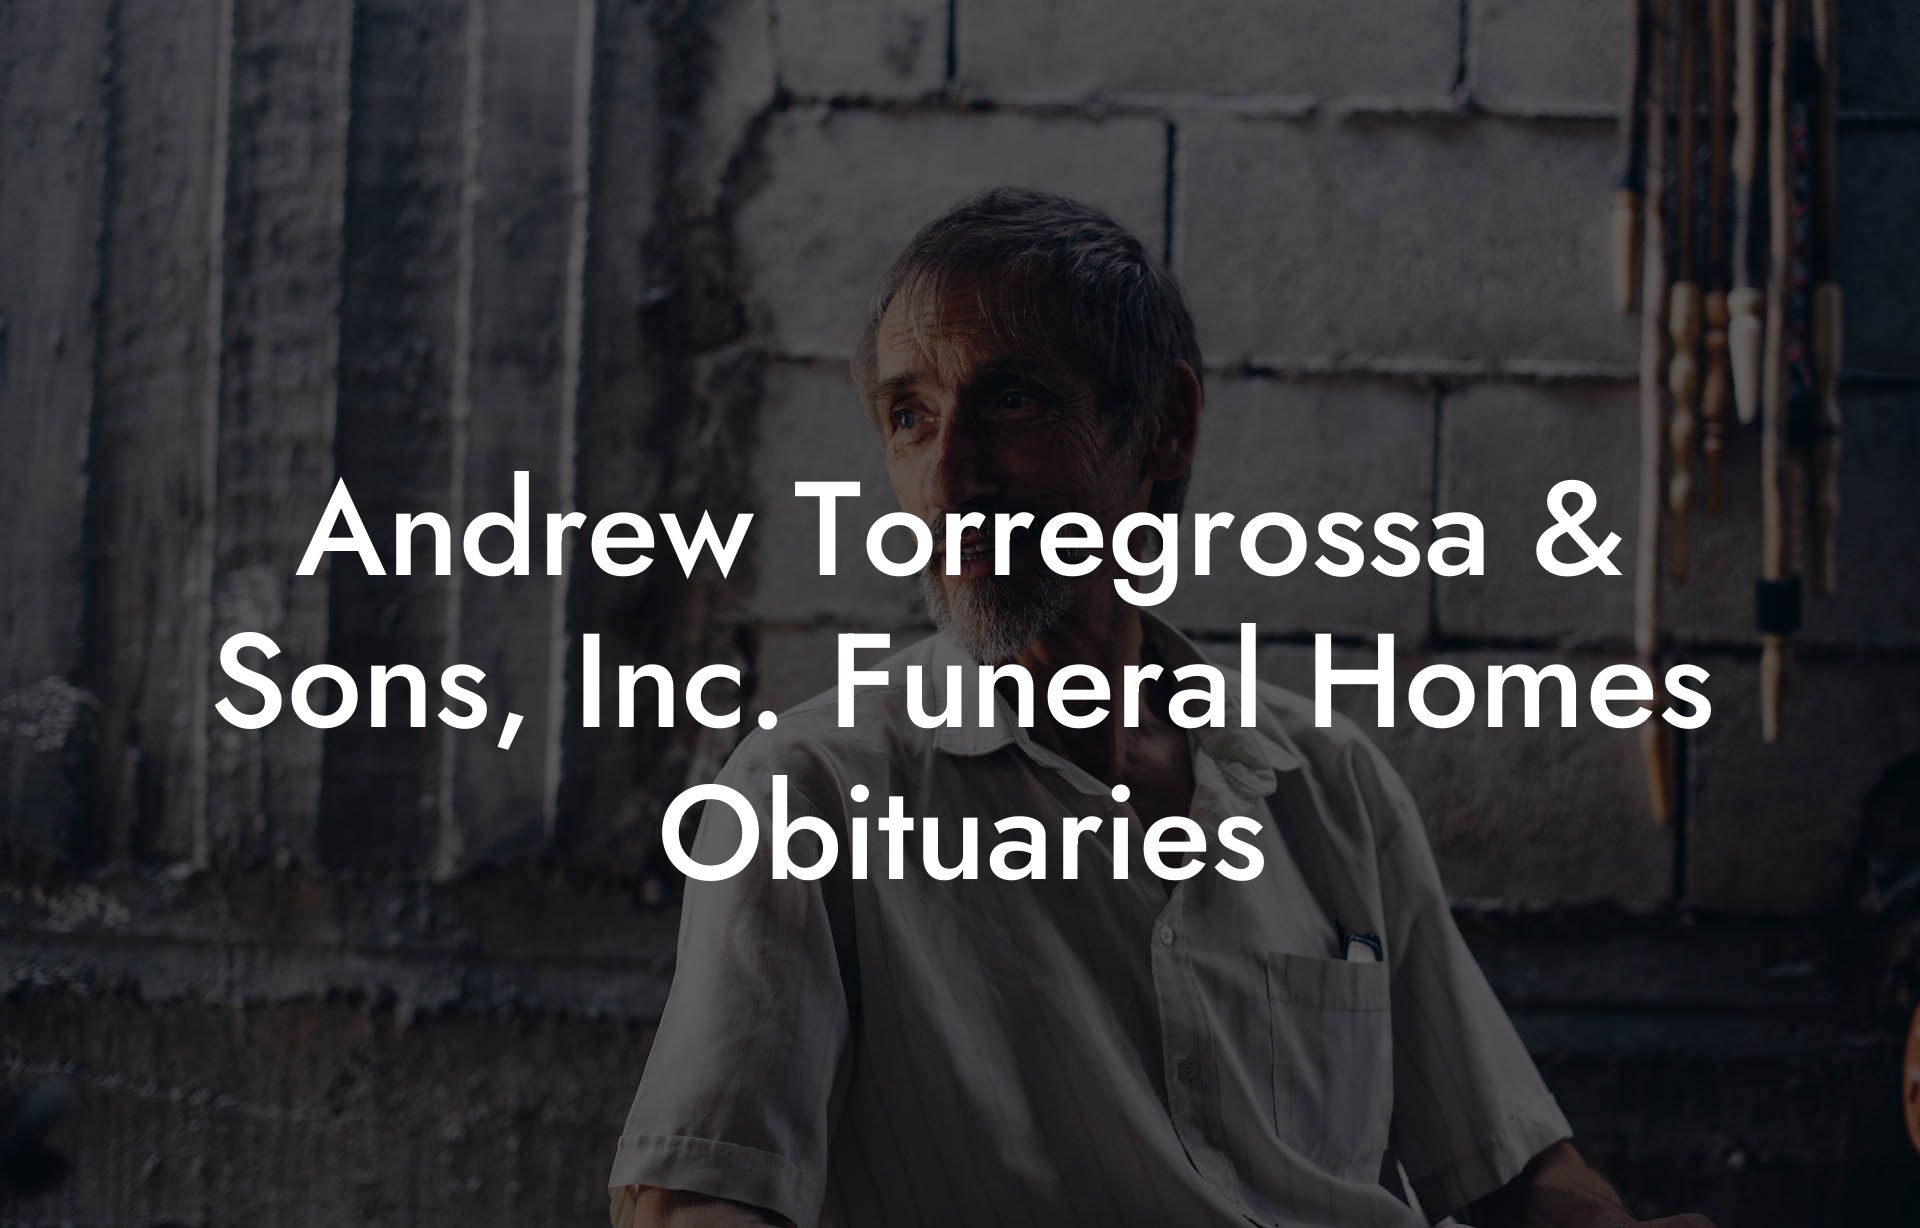 Andrew Torregrossa & Sons, Inc. Funeral Homes Obituaries